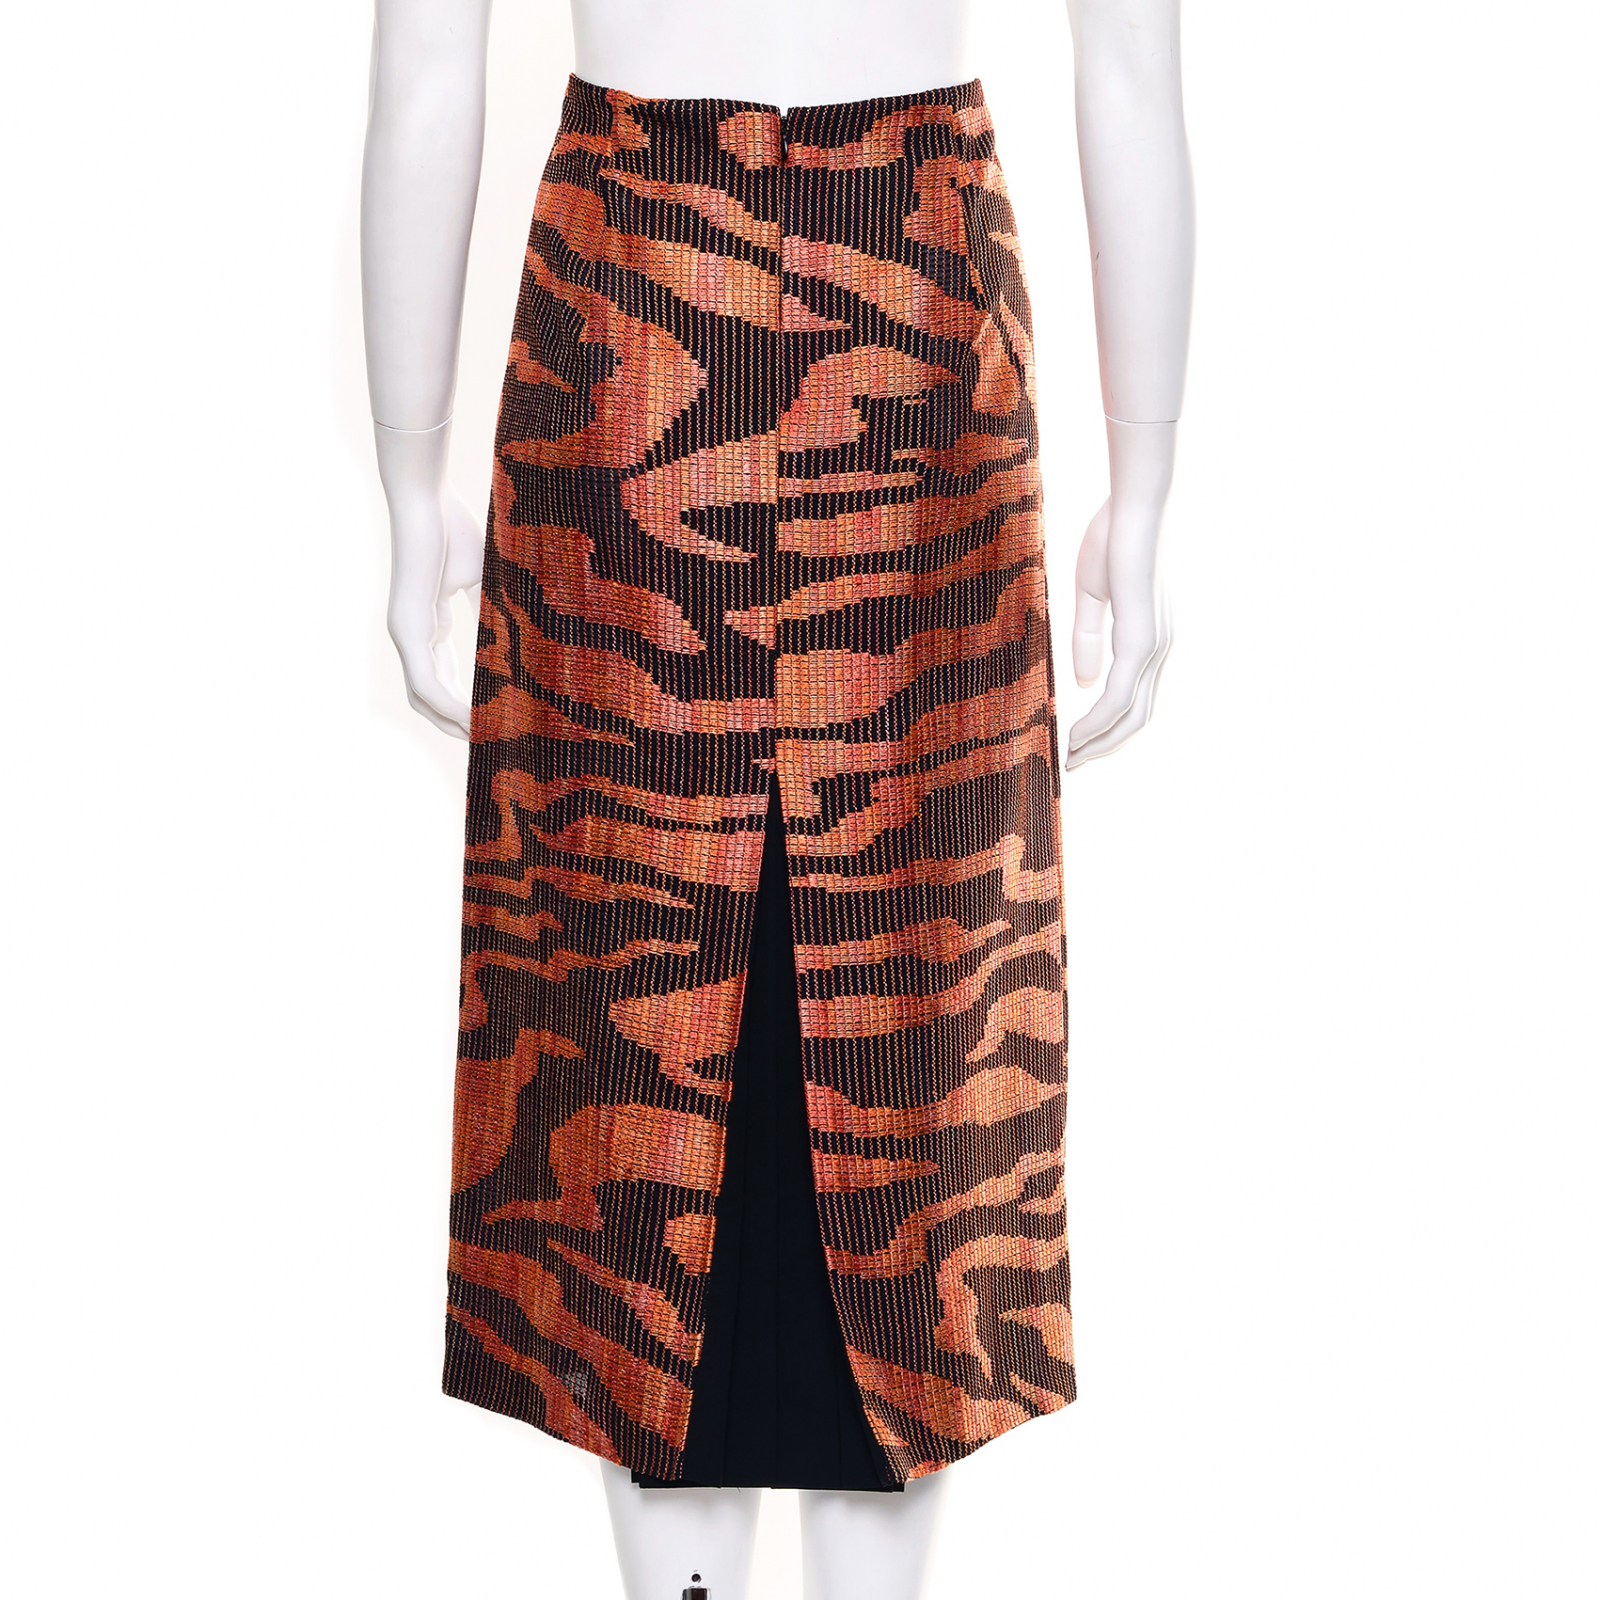 Missoni. Zebra-patterned tweed pencil skirt